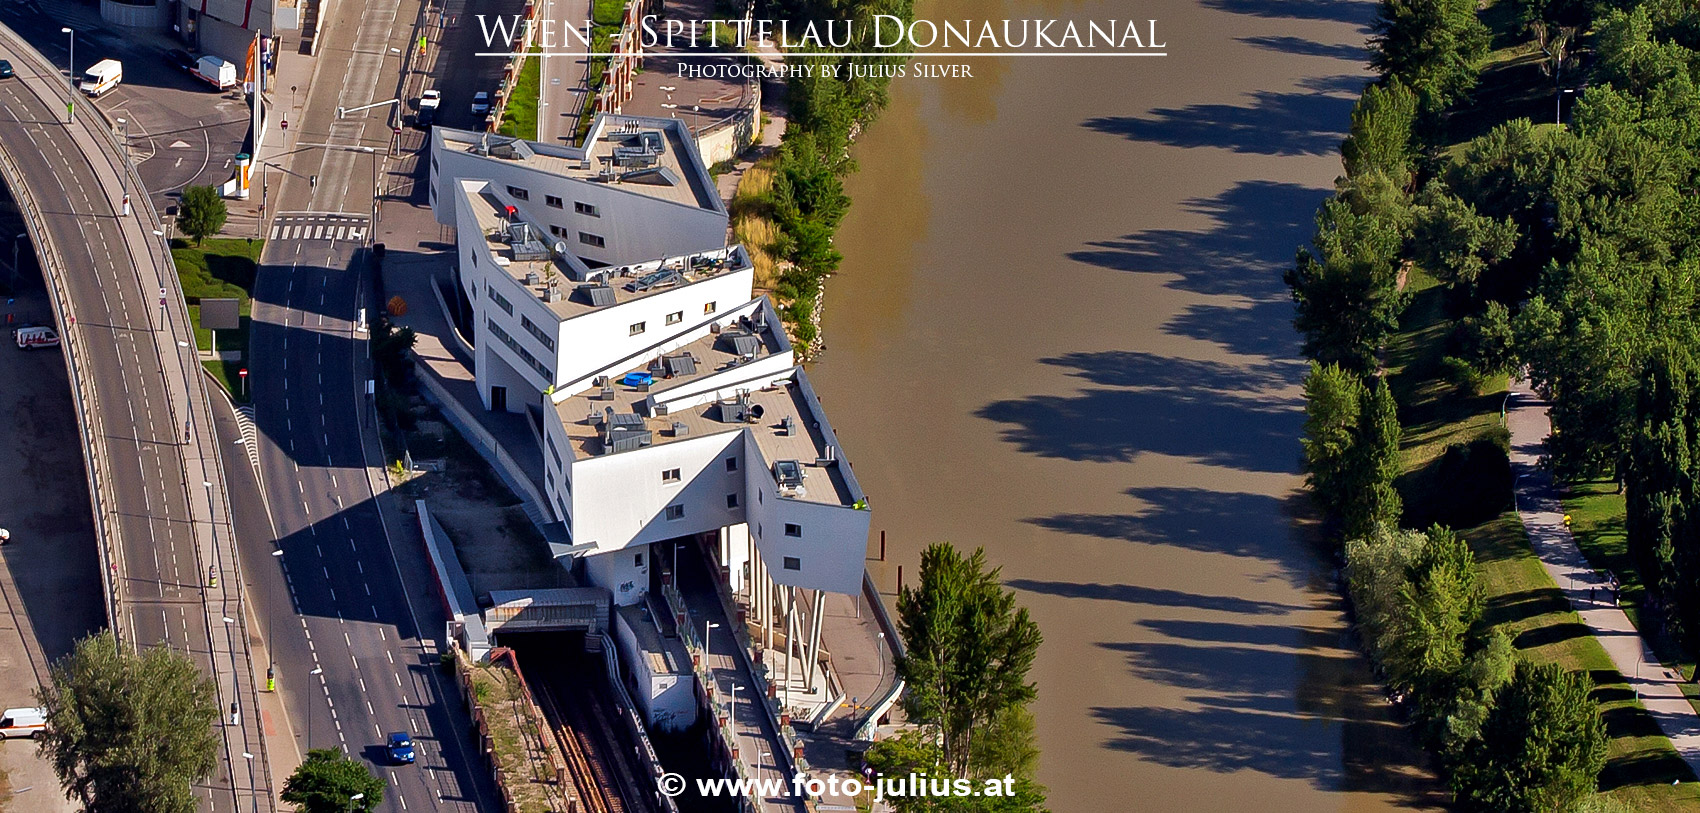 W5915a_Donaukanal.jpg, 580kB